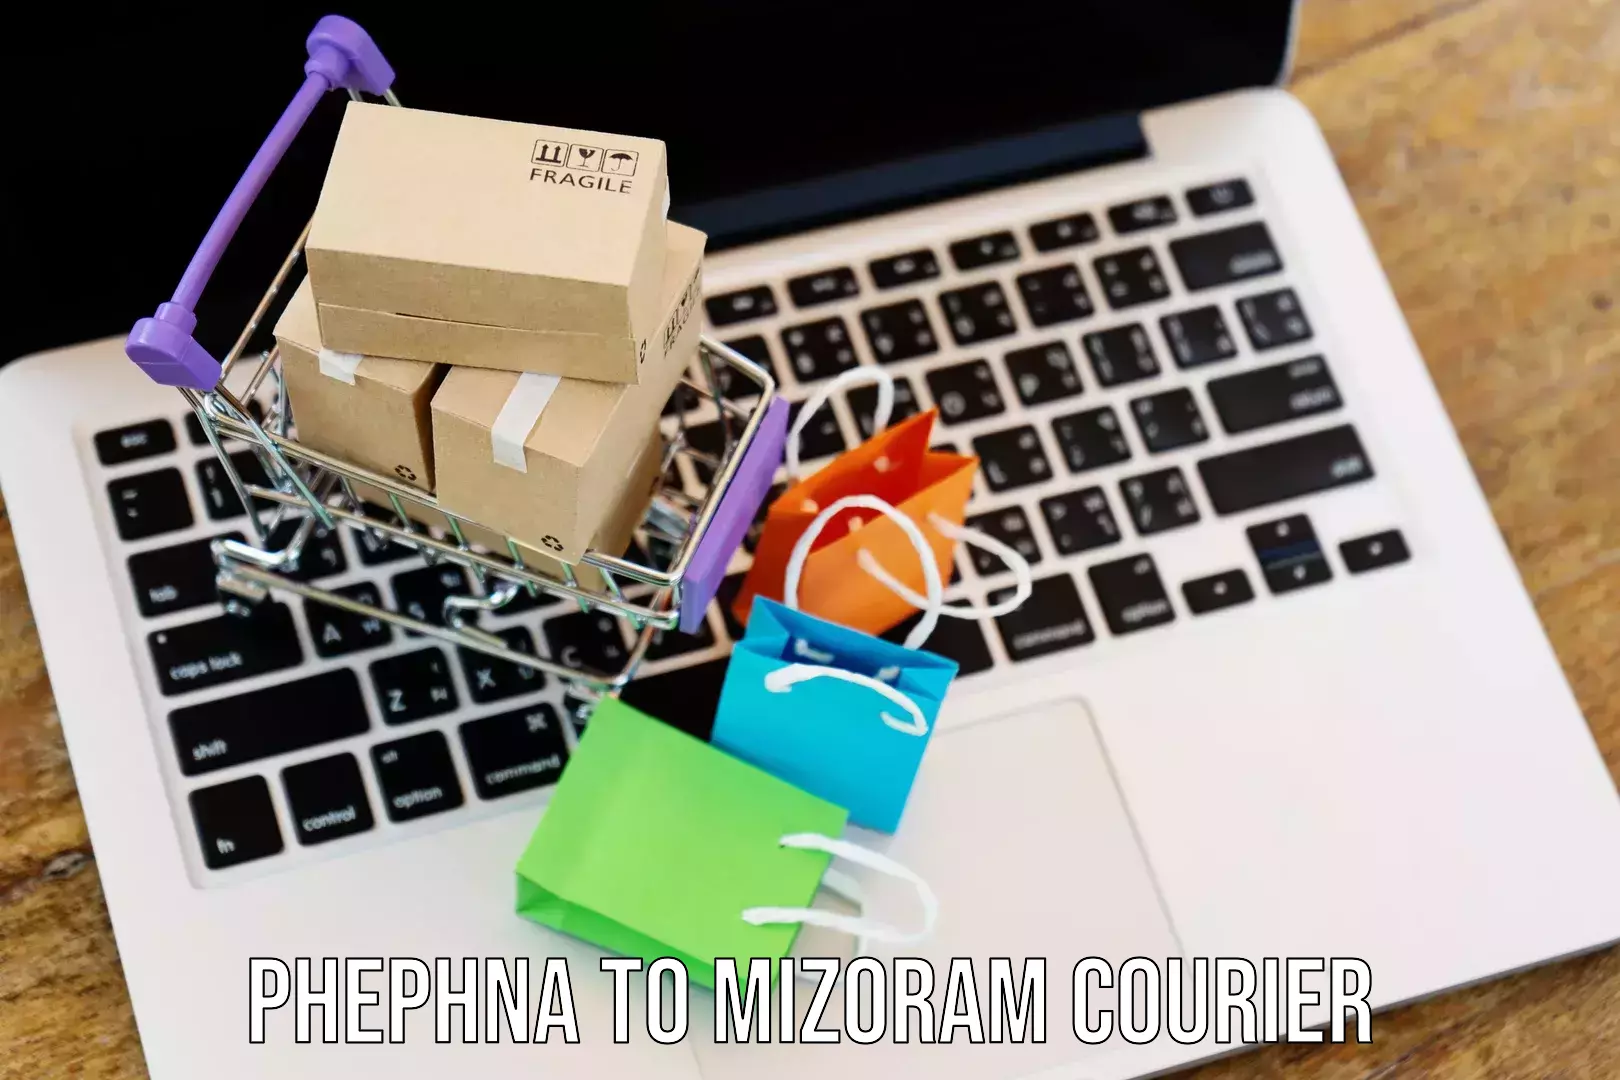 Secure packaging Phephna to Mizoram